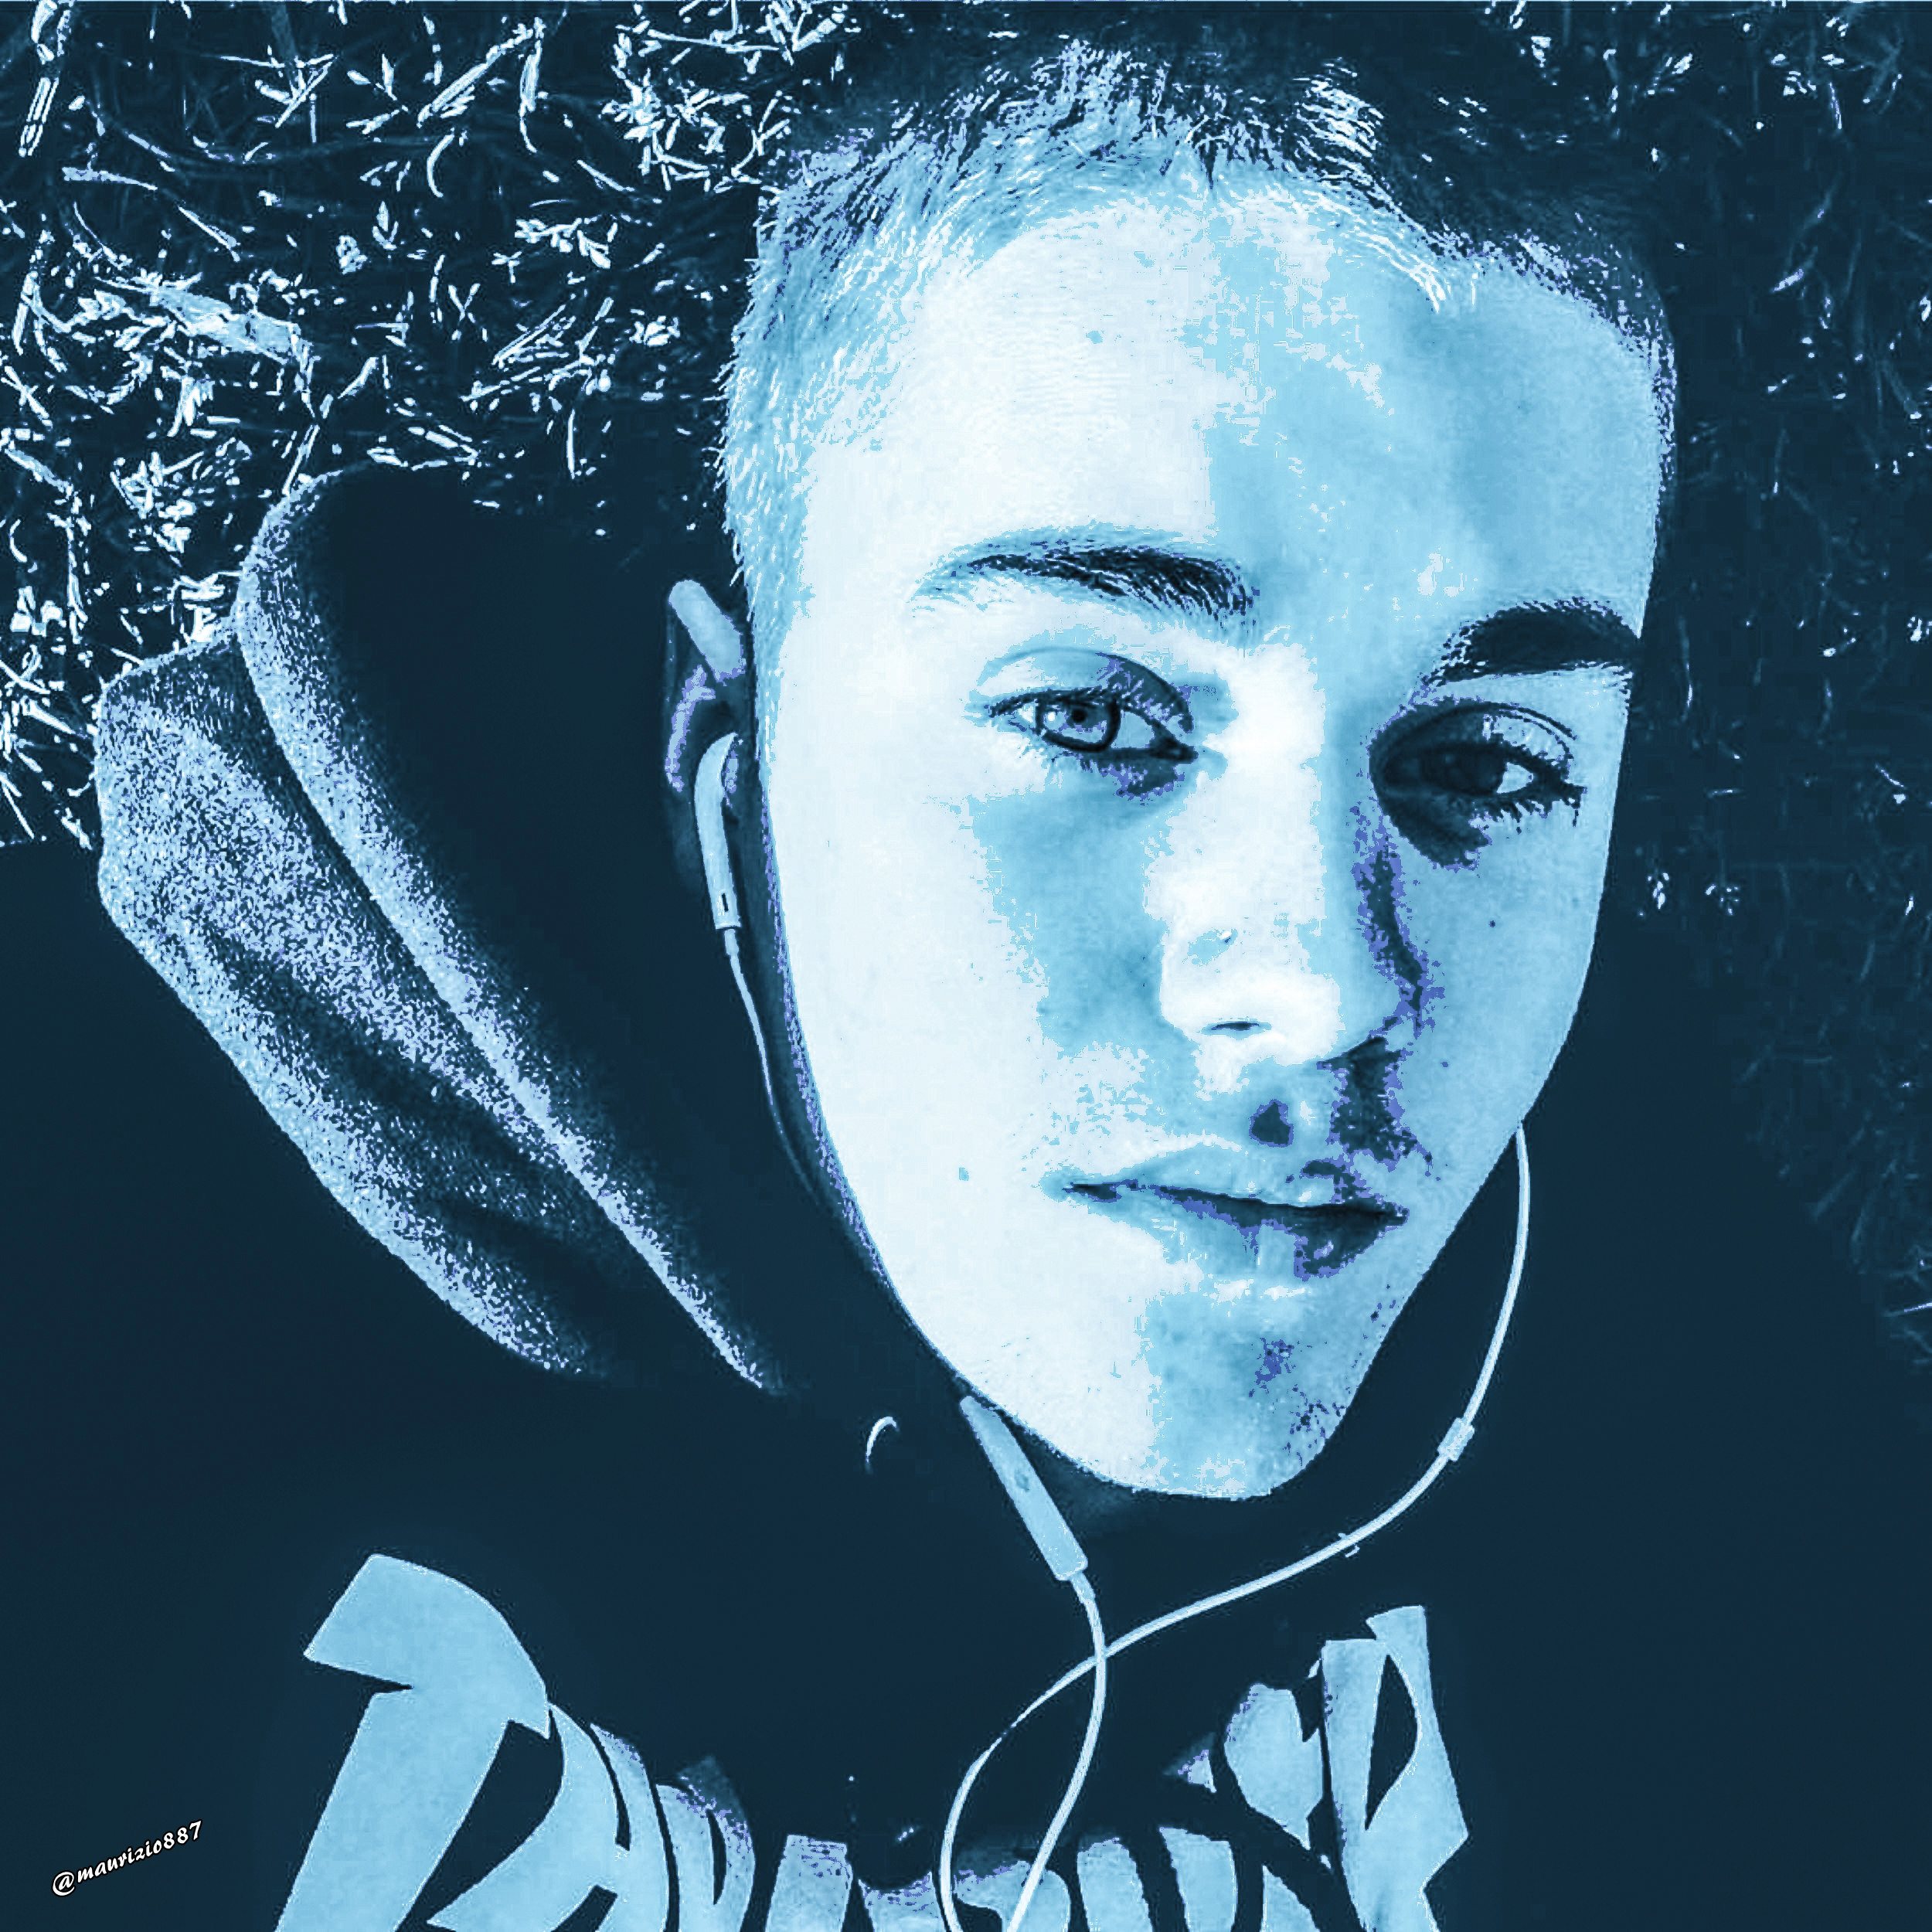 Justin Bieber Image Wallpaper Photos